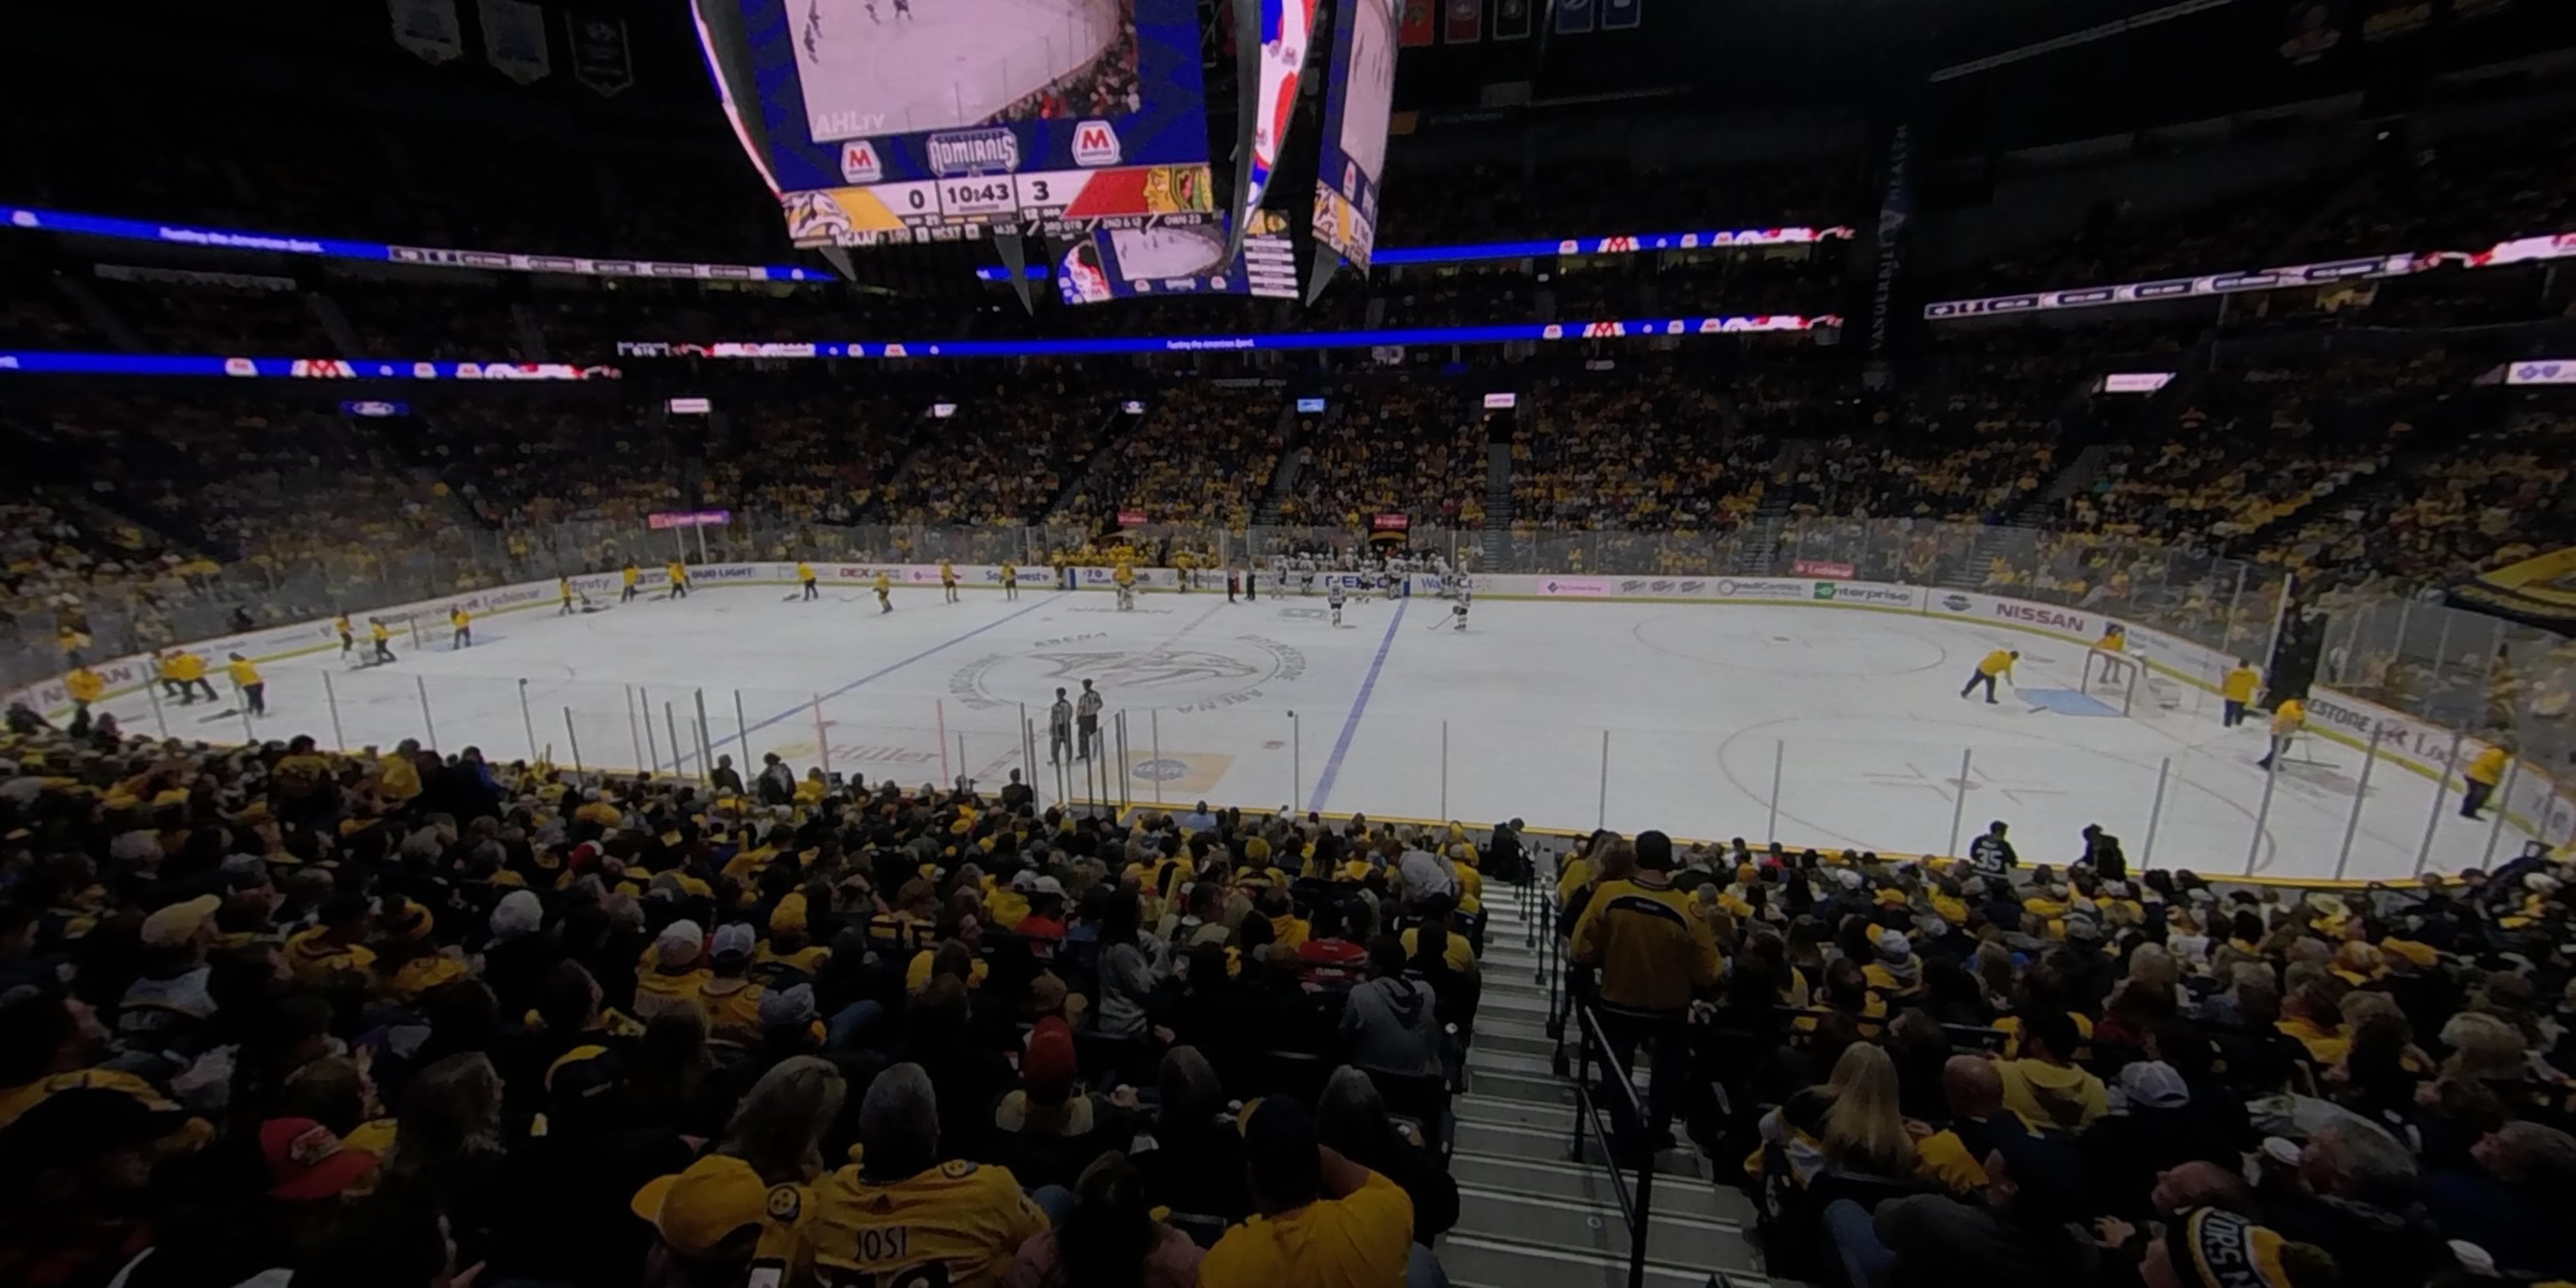 section 106 panoramic seat view  for hockey - bridgestone arena